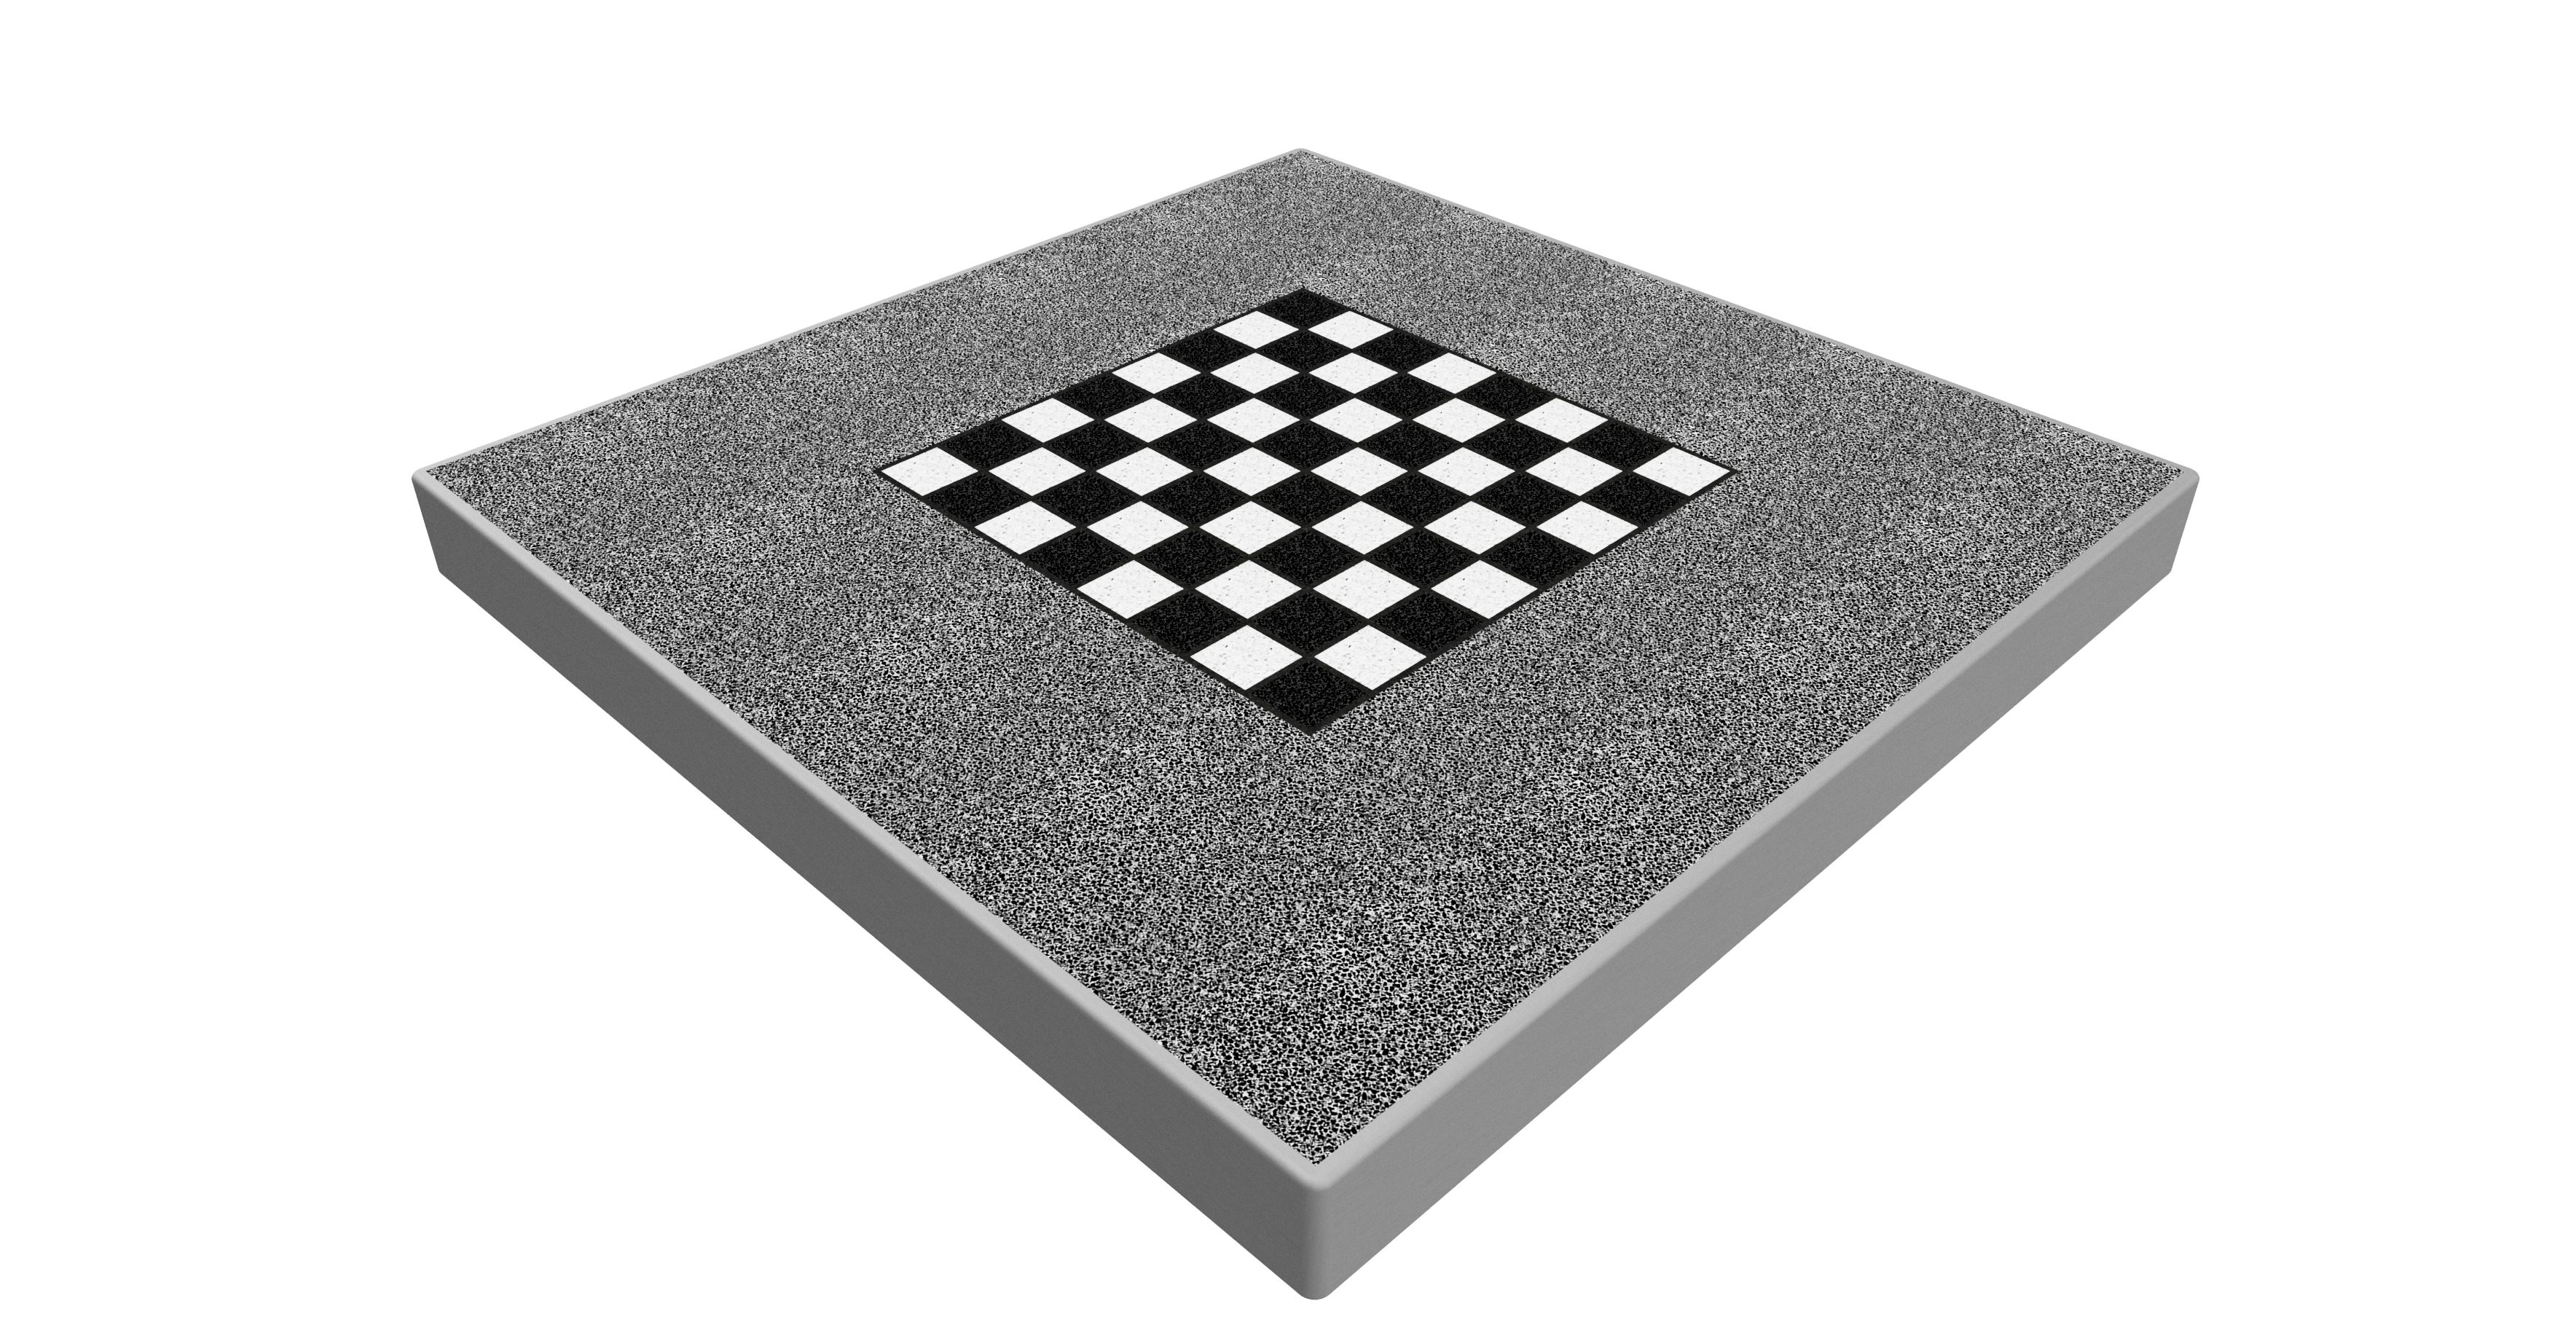  02 Tischplatte Skat Schach